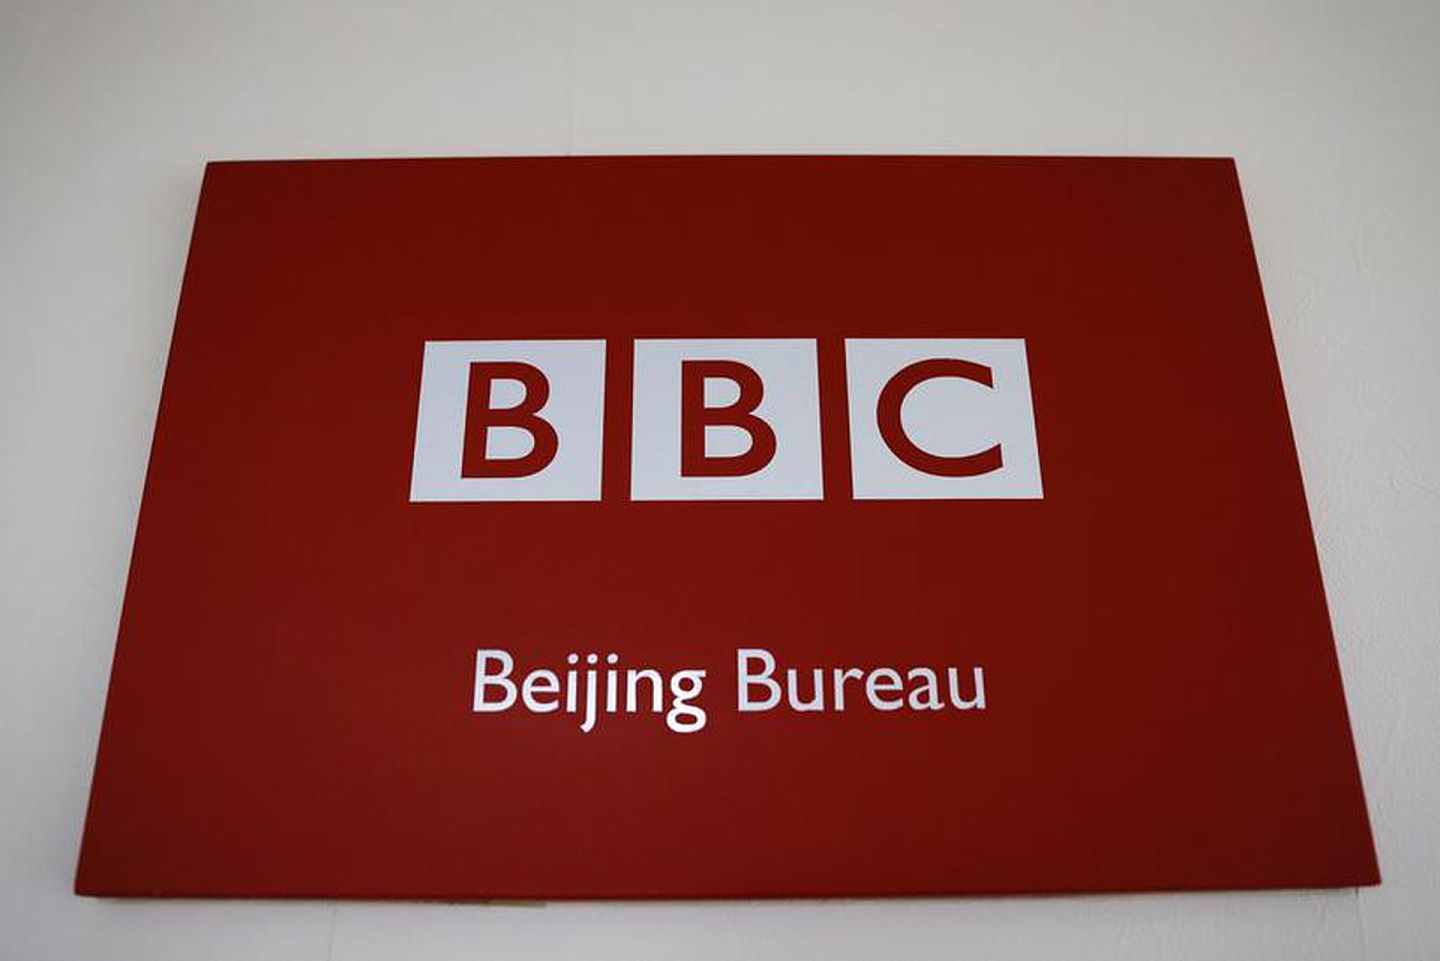 BBC一年收到近50万次观众投诉，被指报道存在偏见（图） - 1